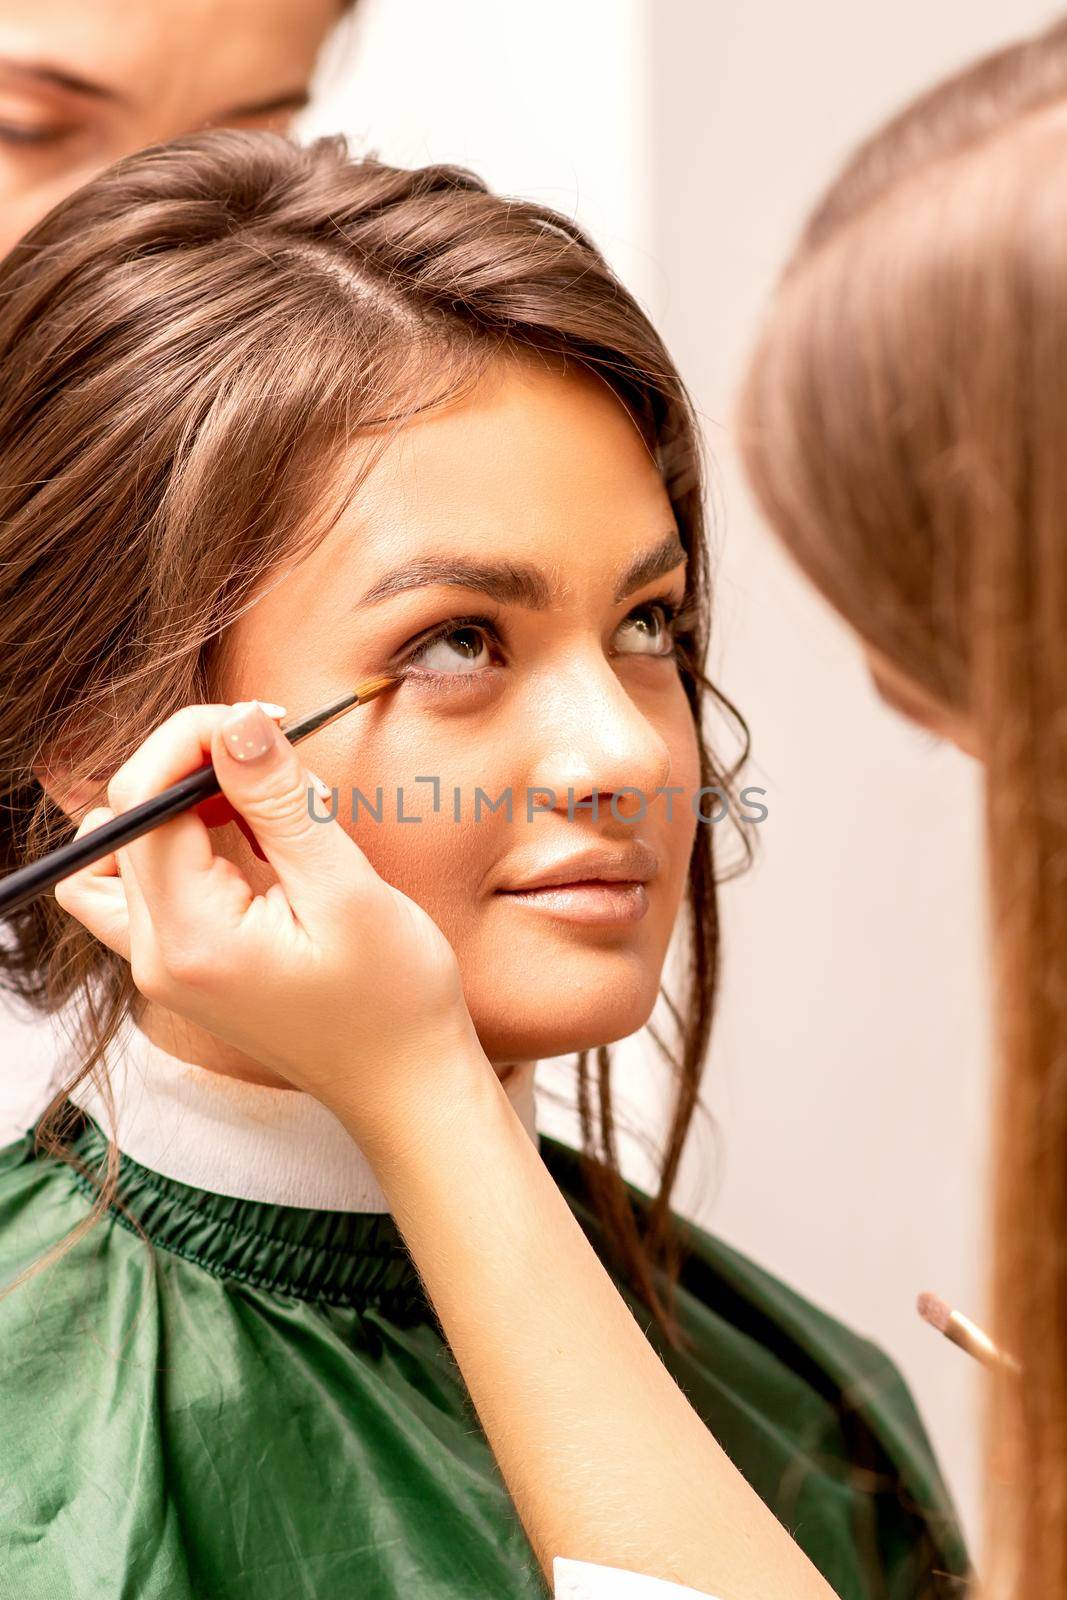 The makeup artist applies a concealer under the eyes using a makeup brush